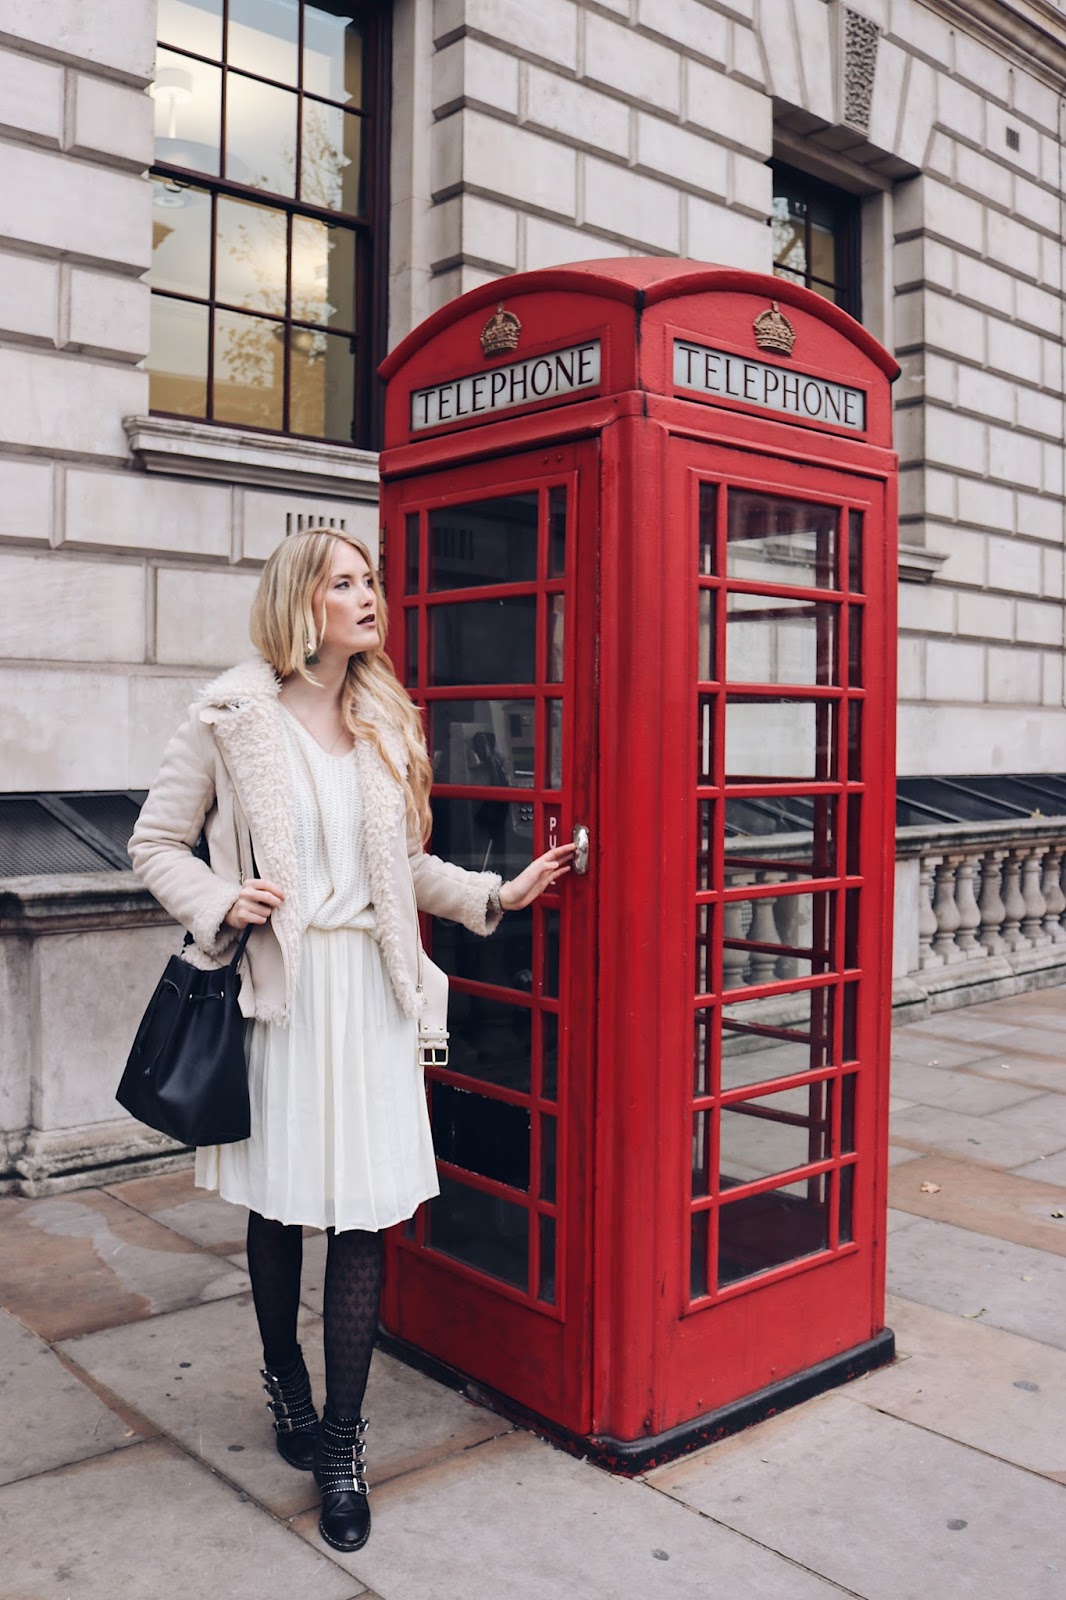 Fashionblog Stuttgart: Outfit All White Gambettes Box Strumpfhose an Telefonzelle London 